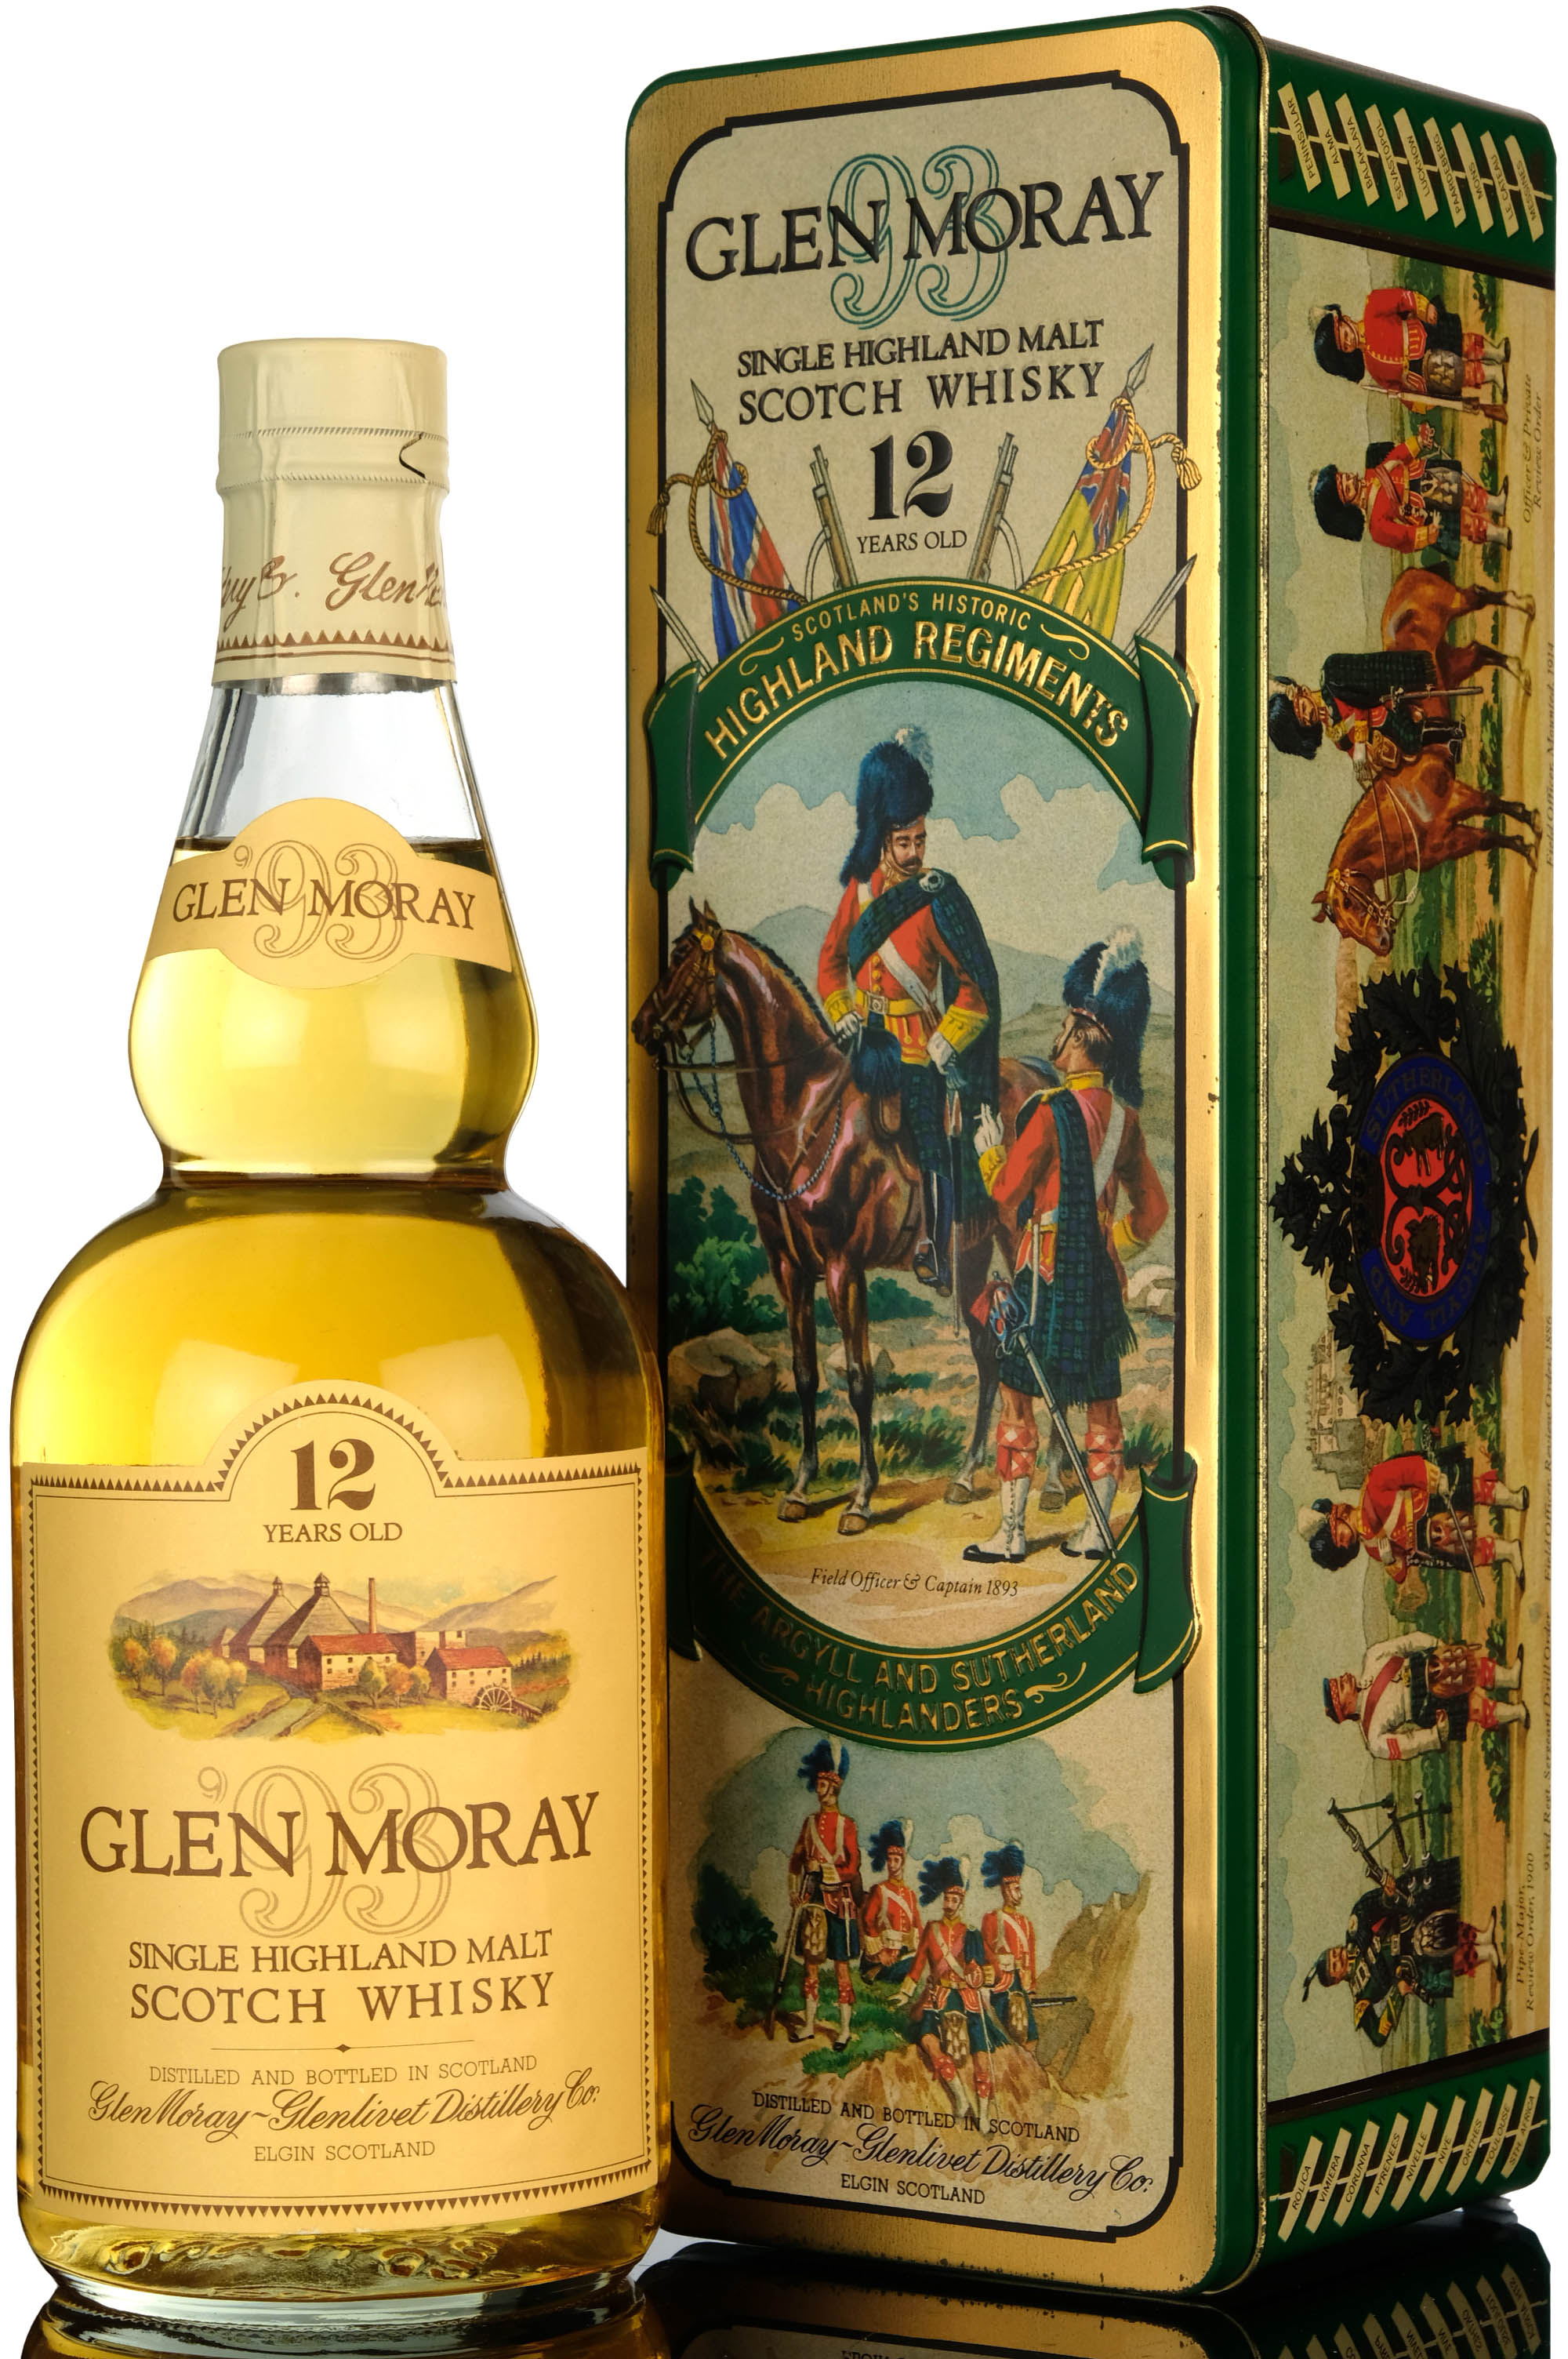 Glen Moray 12 Year Old - Circa 1990 - The Argyll and Sutherland Highlanders